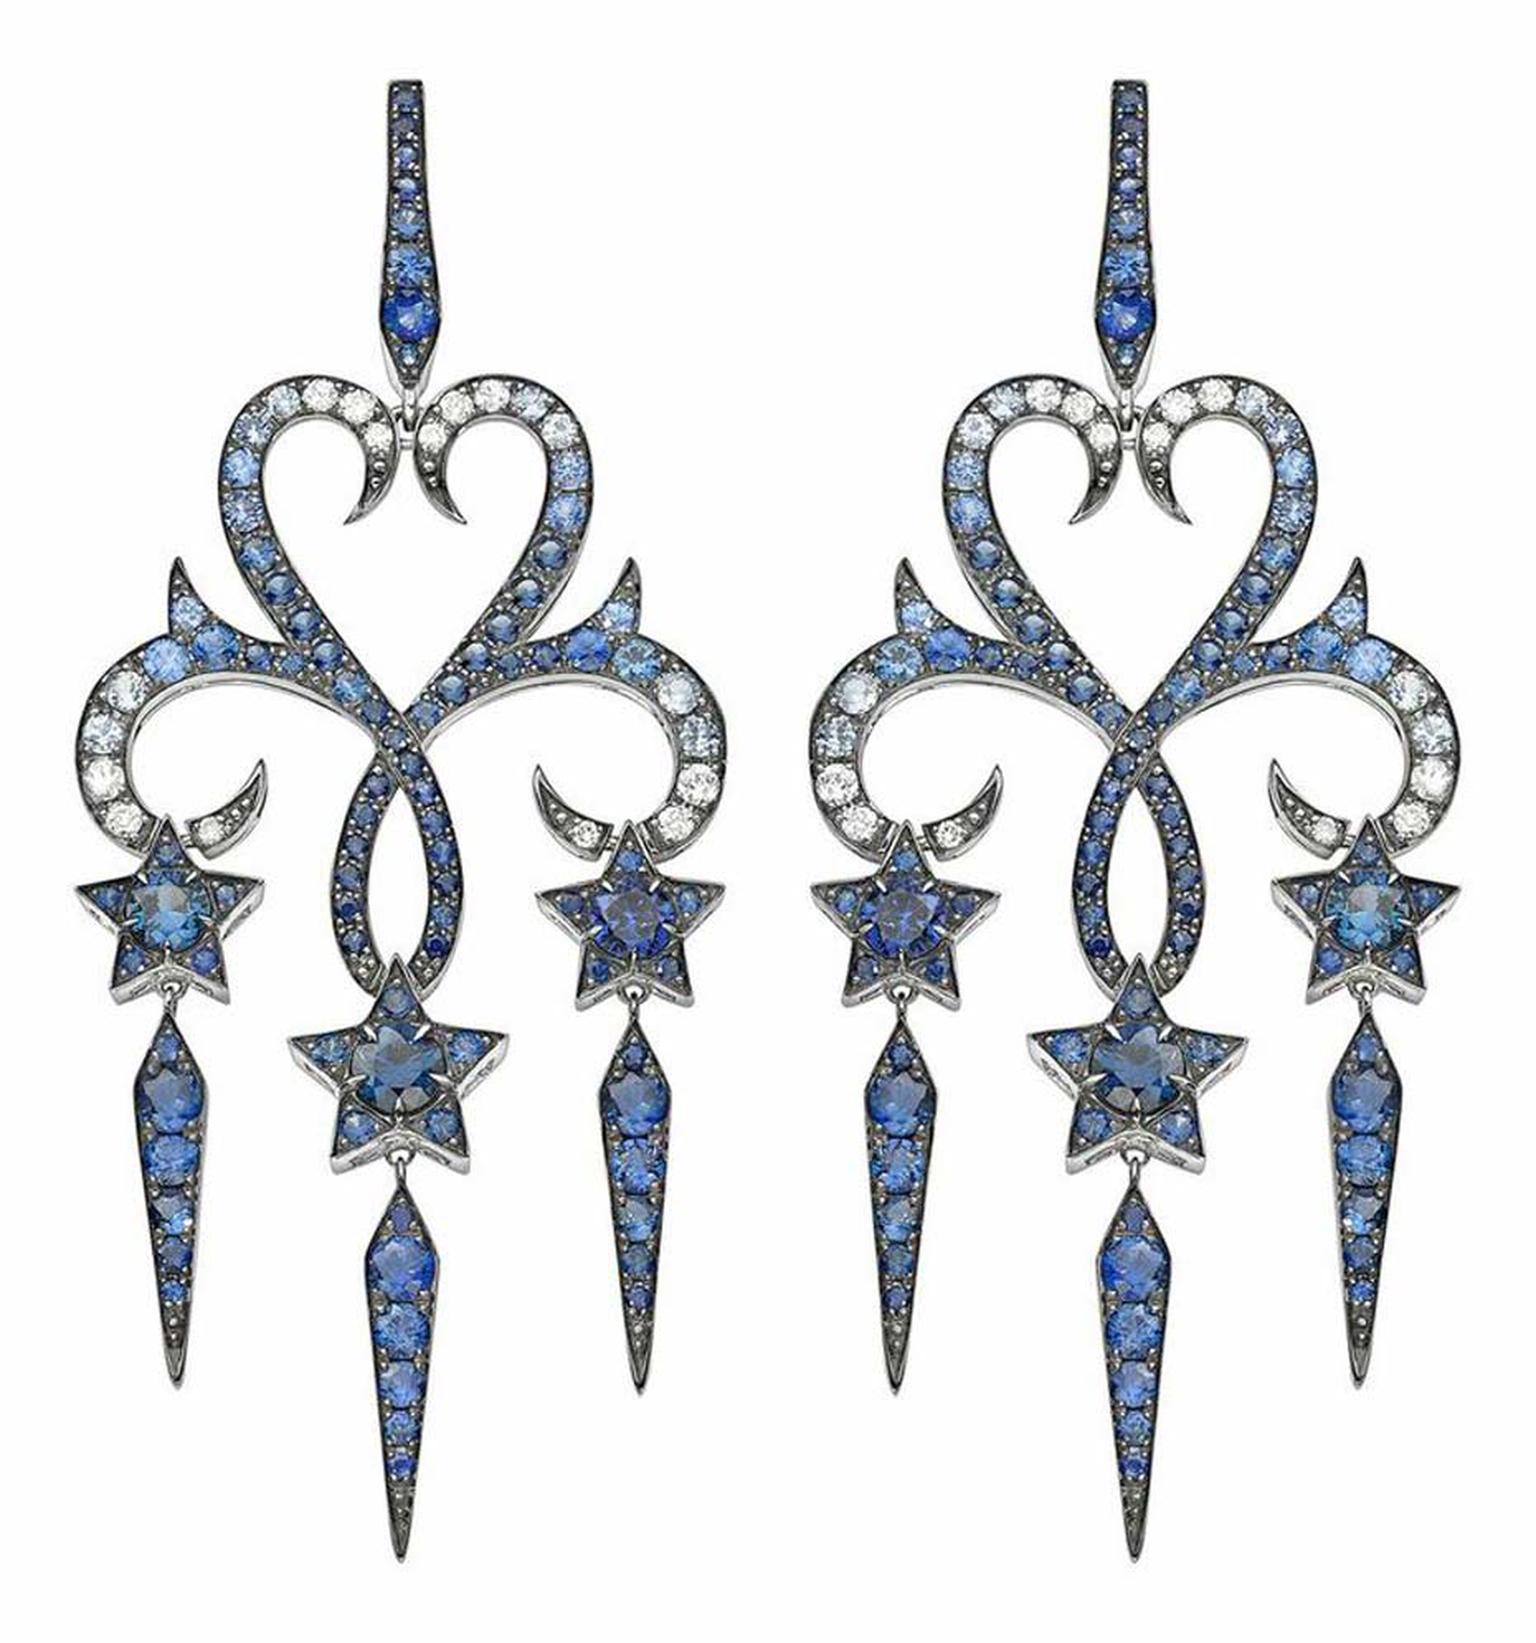 Stephen Webster Belle Epoque high jewellery earrings featuring blue sapphires.